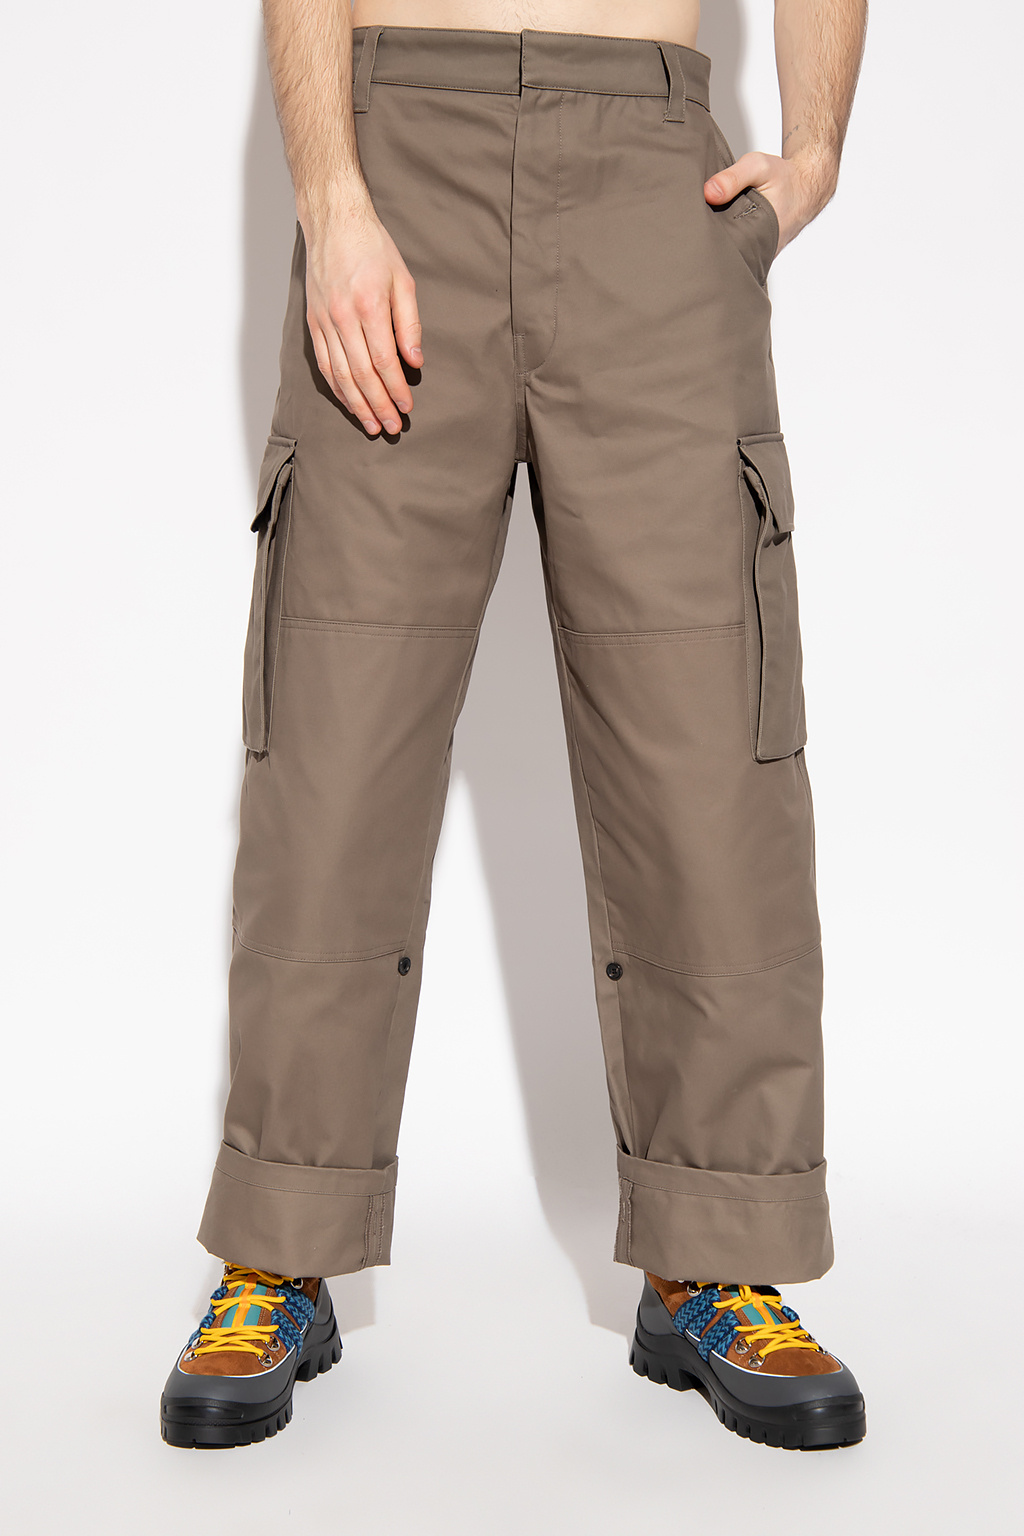 Loewe Cargo Bear trousers